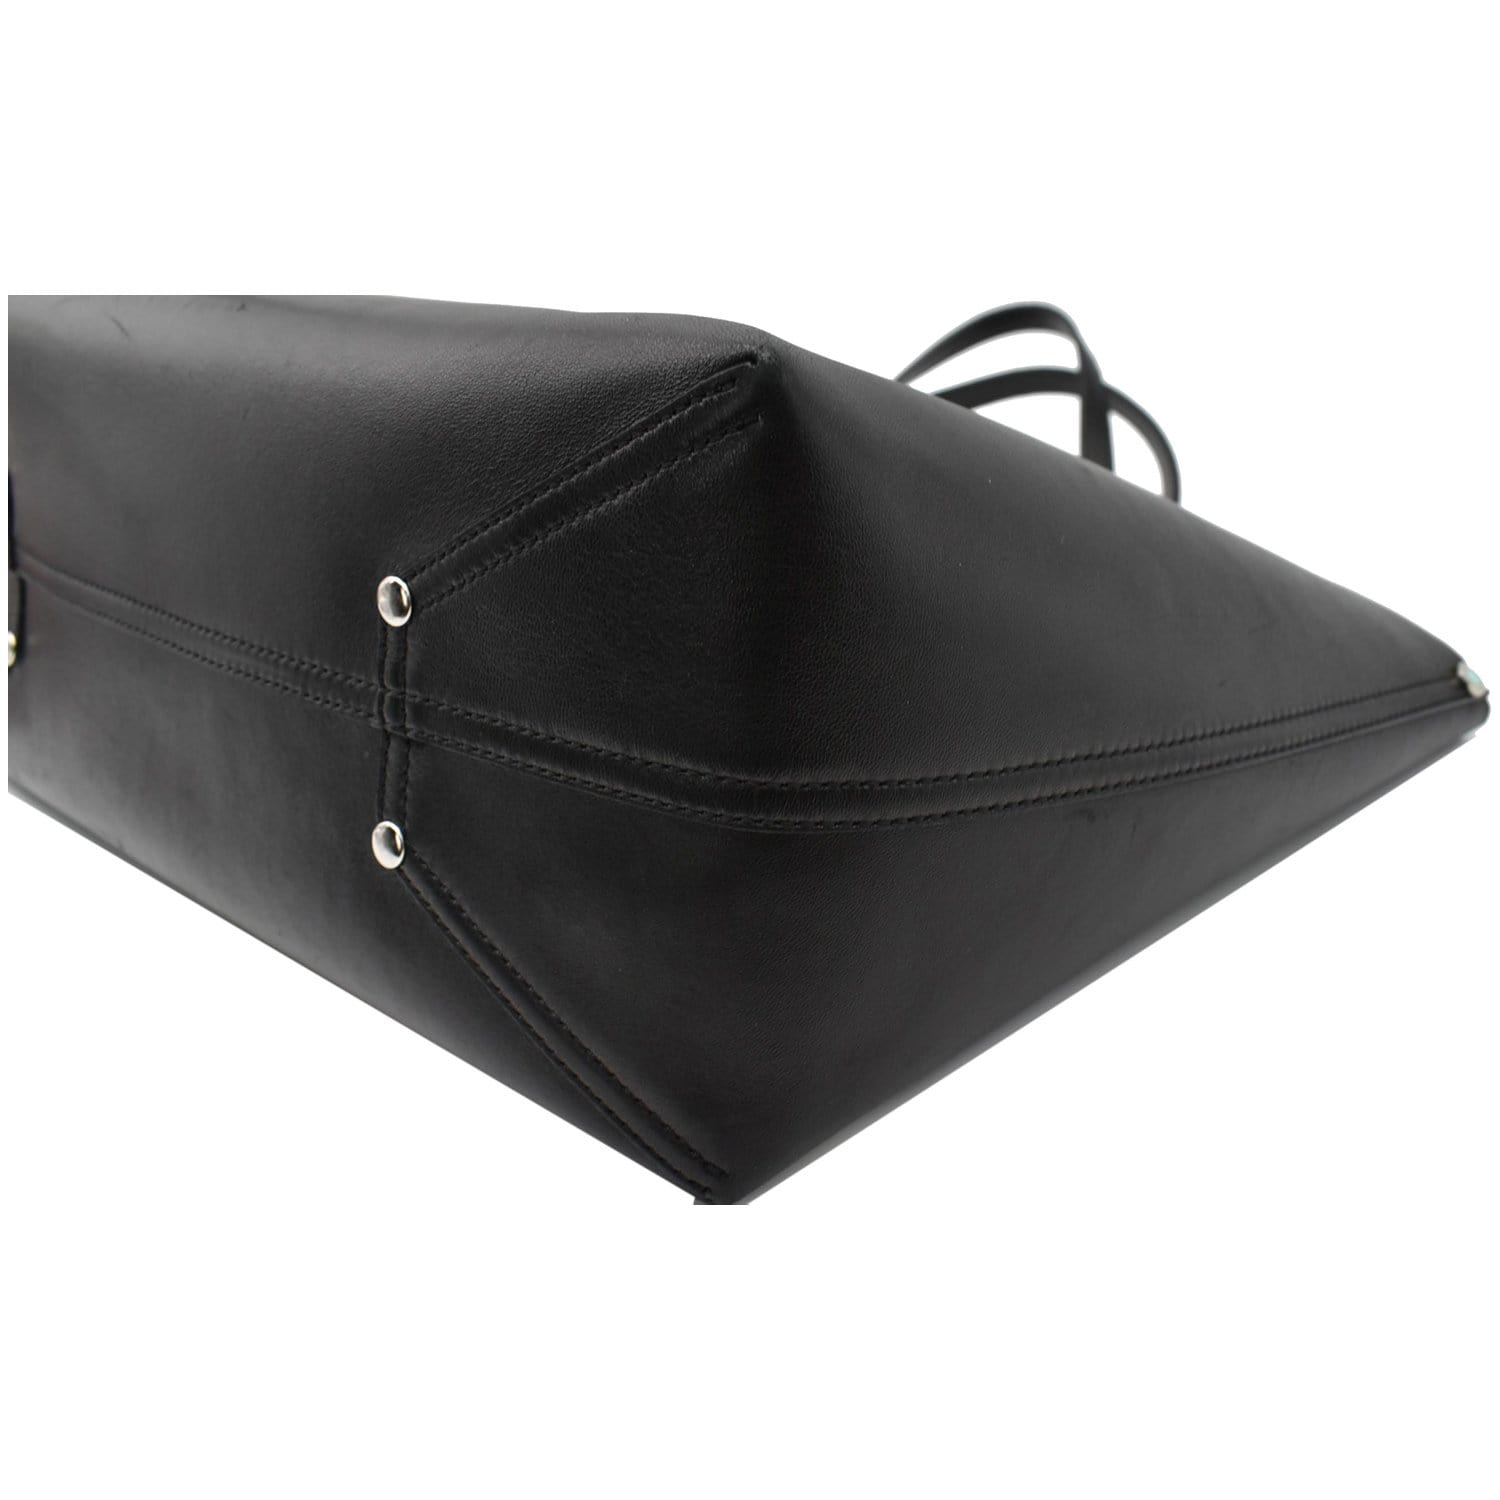 Leather handbag Tiffany & Co Black in Leather - 35716137